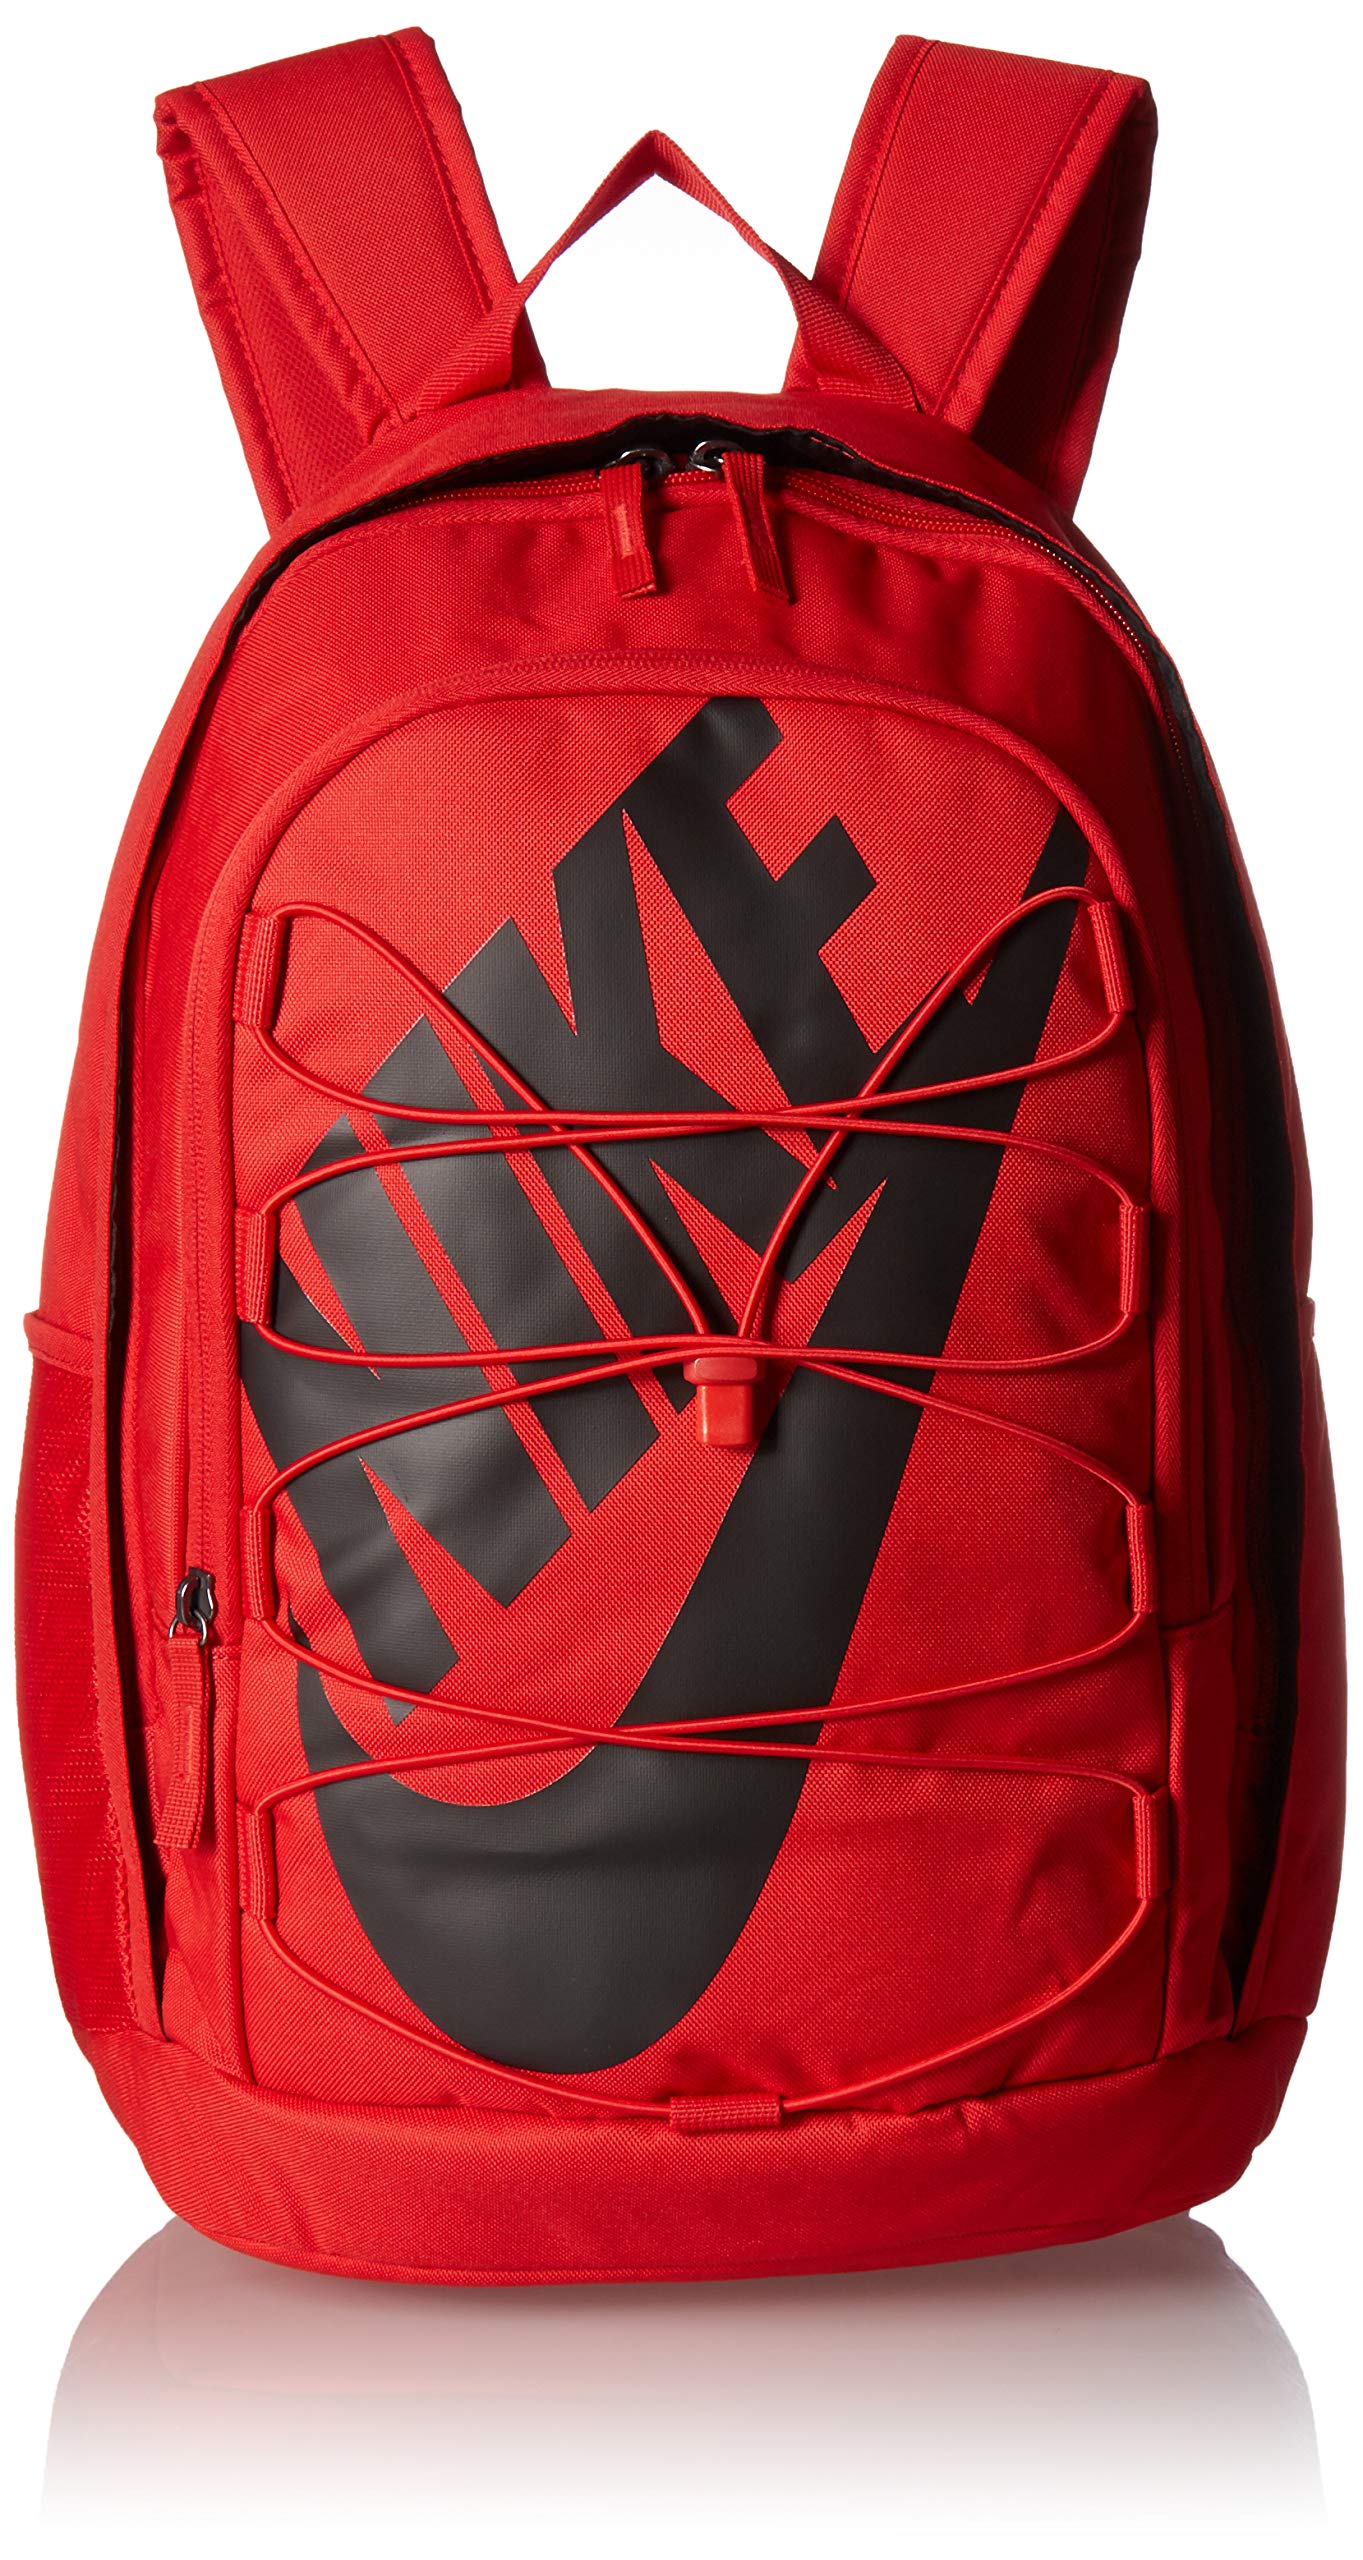 Rucksack | Nike bags, Stylish school bags, Bags